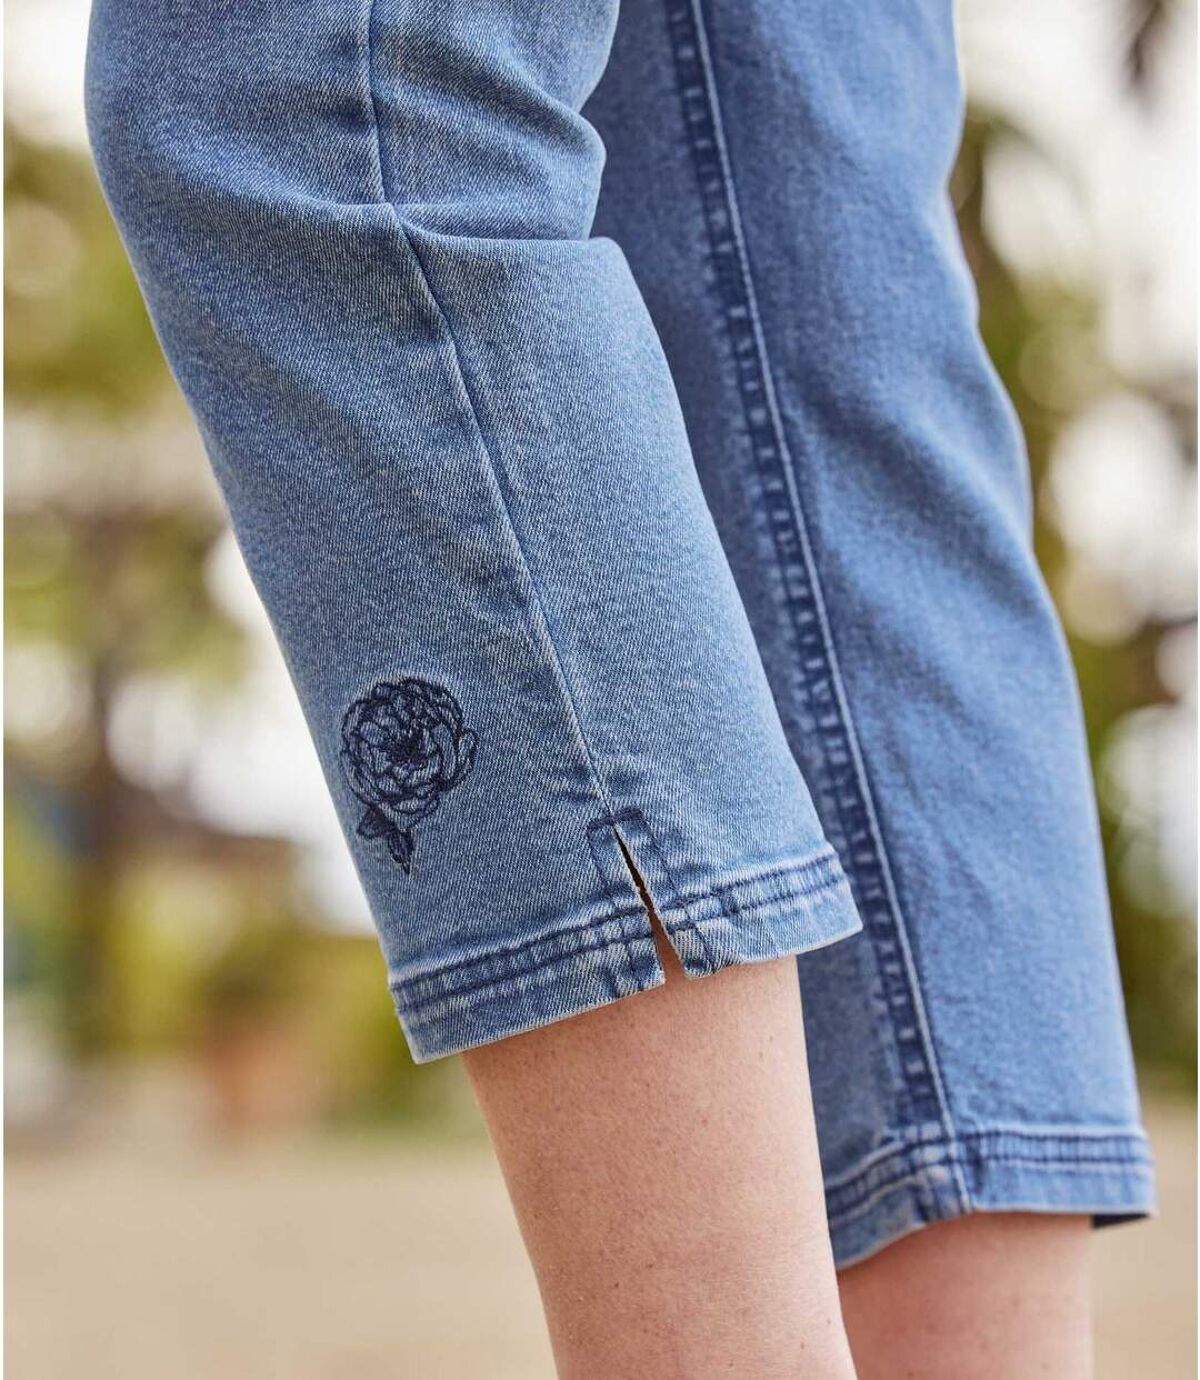 7/8 stretch jeans met borduursels Atlas For Men